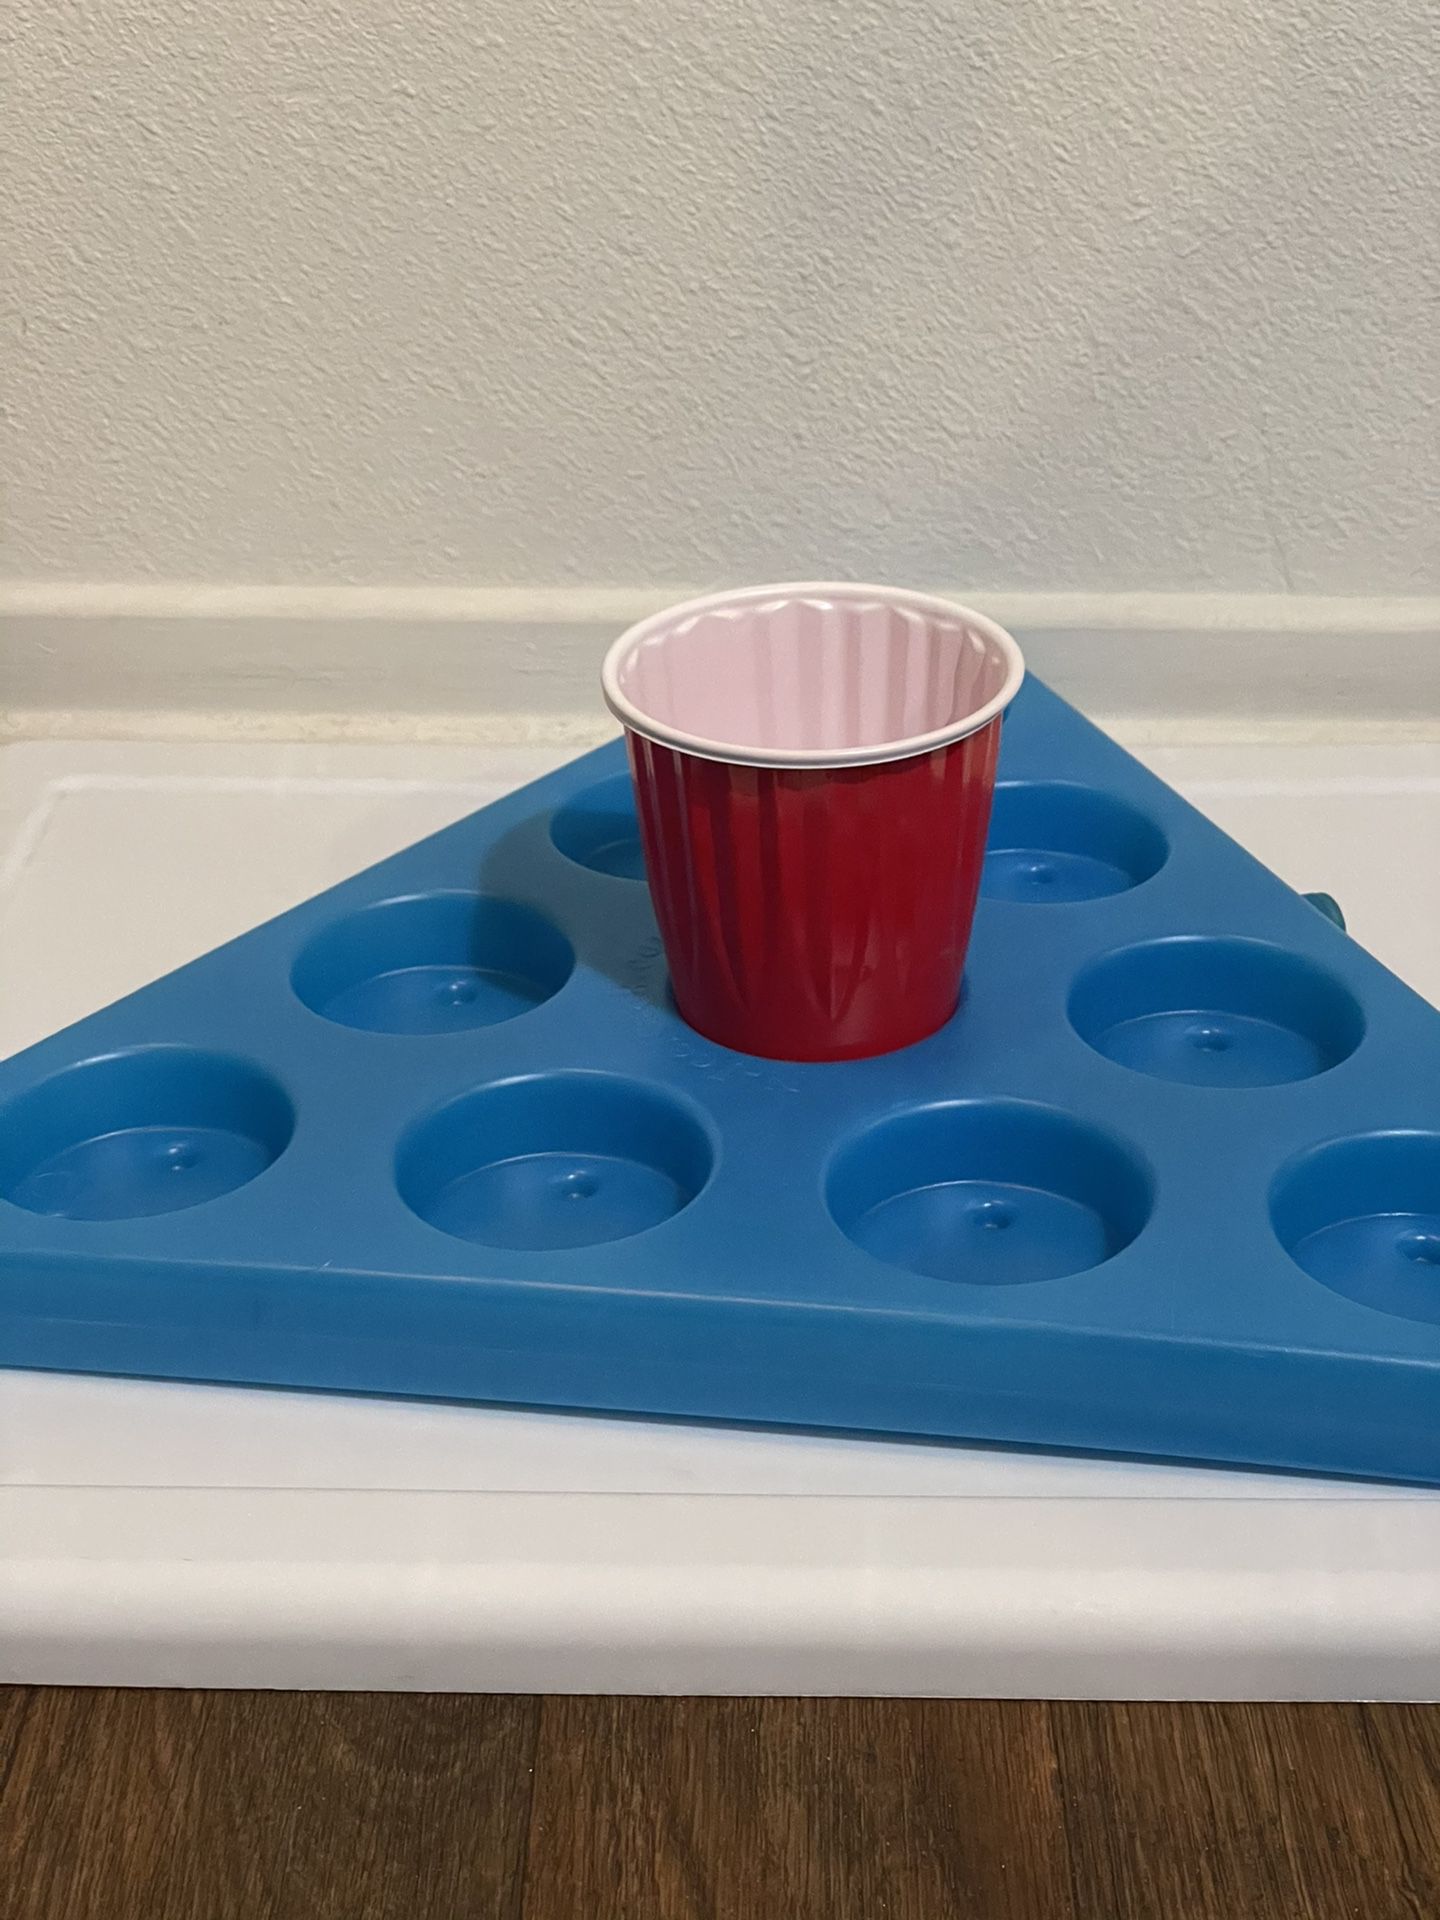 GoPong N-Ice Rack Freezable Beer Pong Set